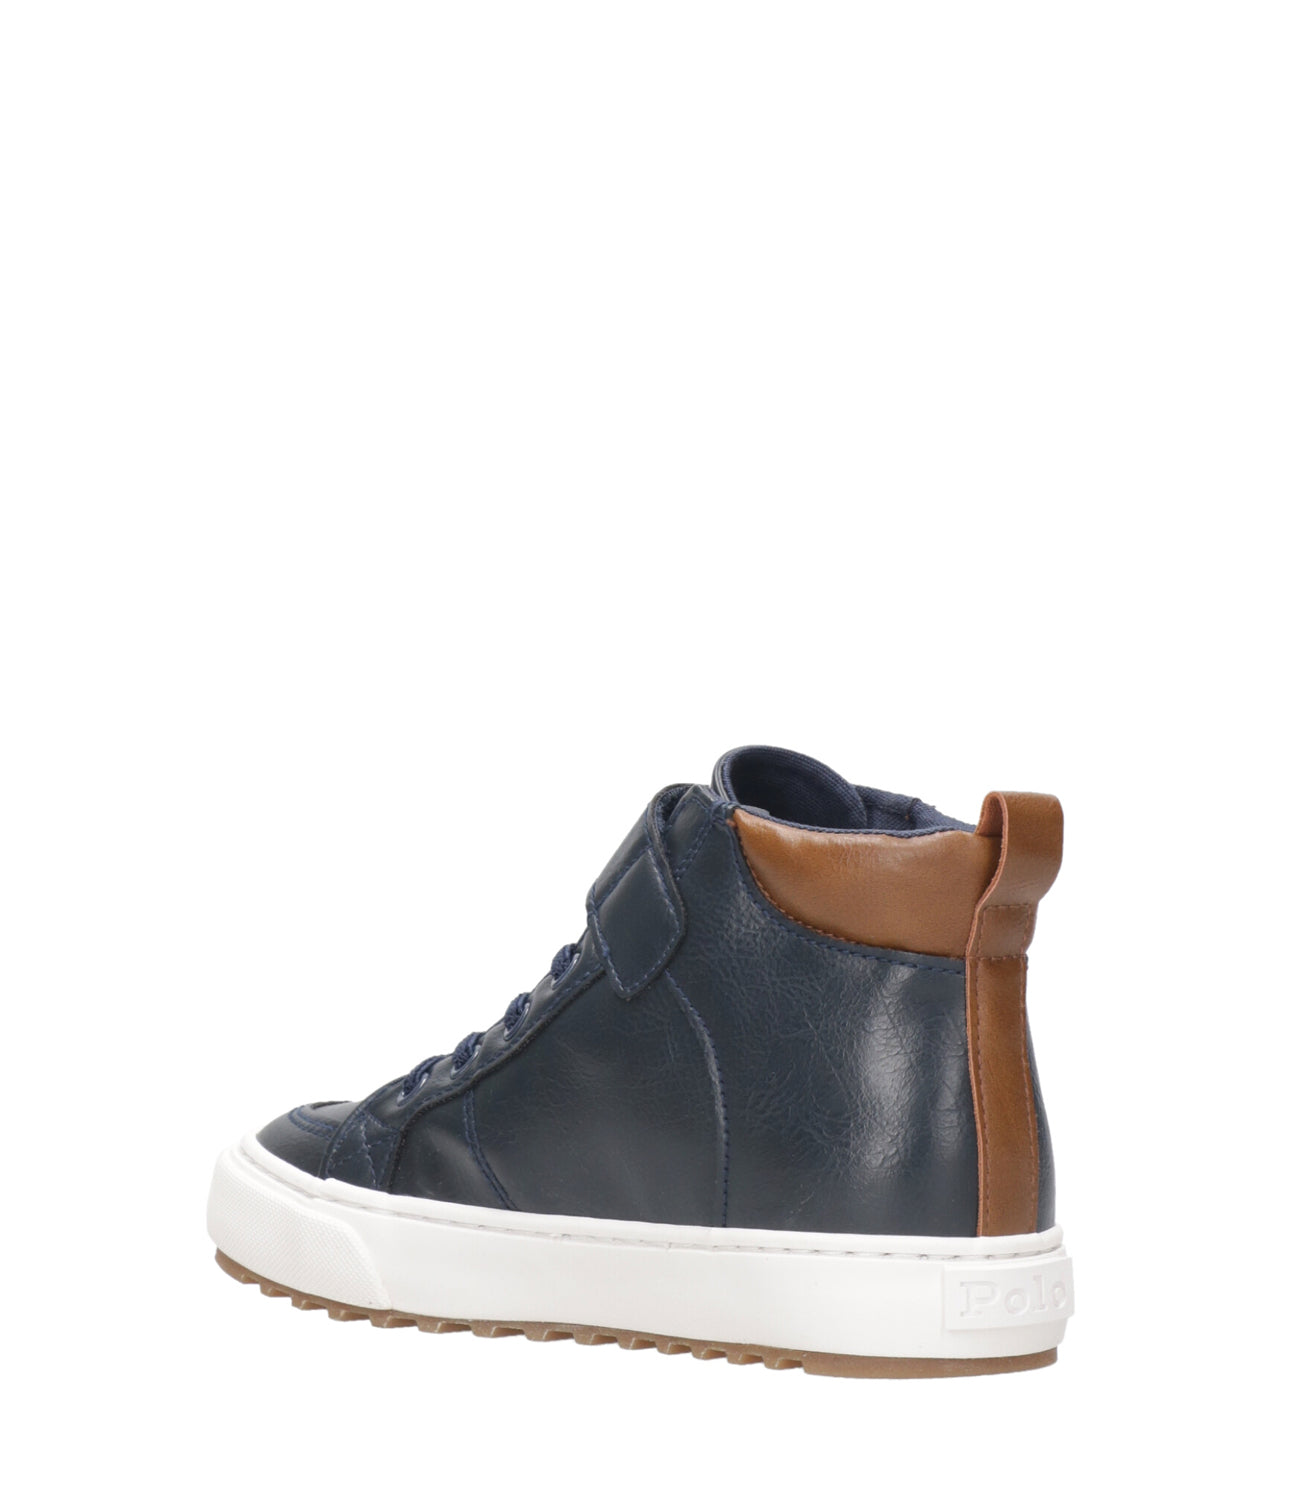 Ralph Lauren Childrenswear | High Sneakers Jaxson PS Navy Blue and White